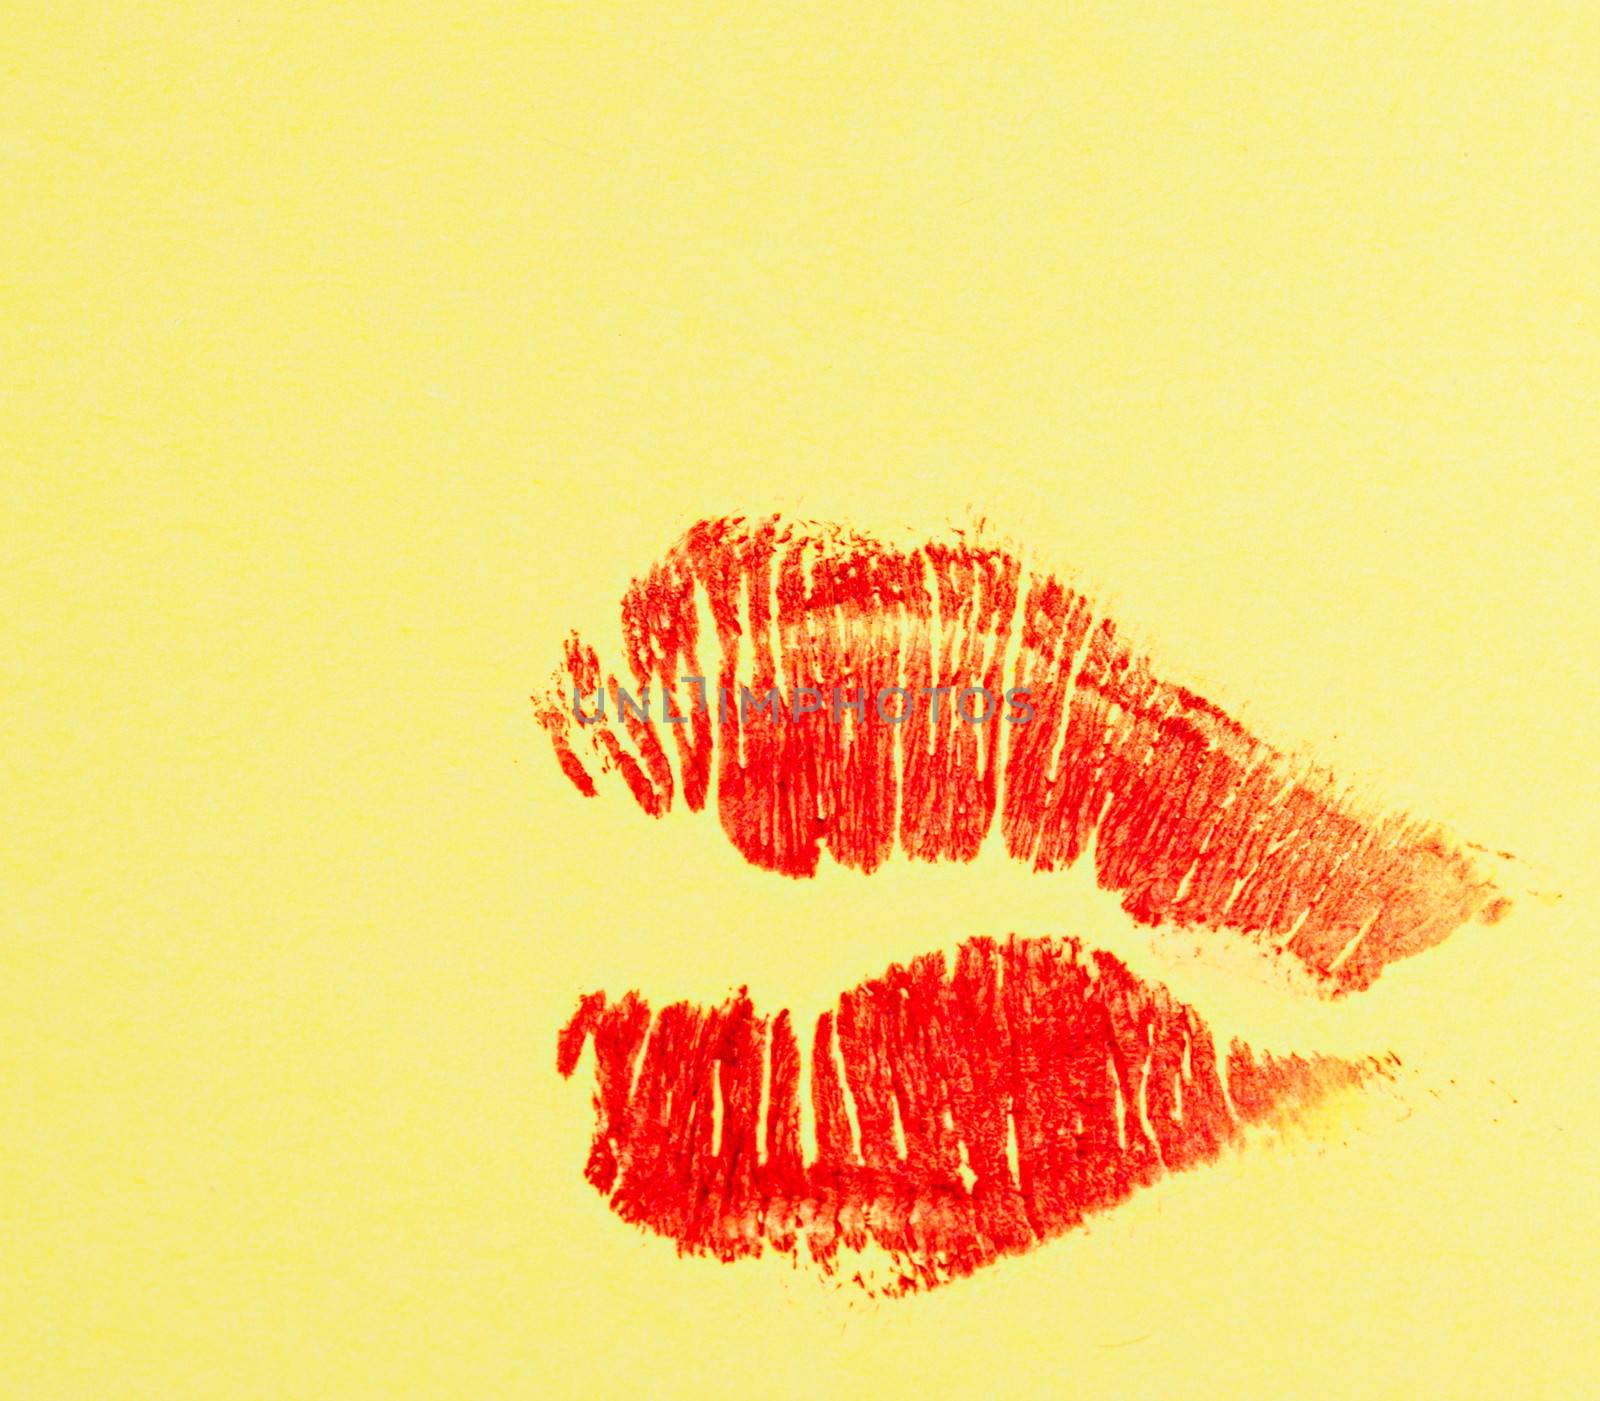 Imprint of lipstick by Vagengeym